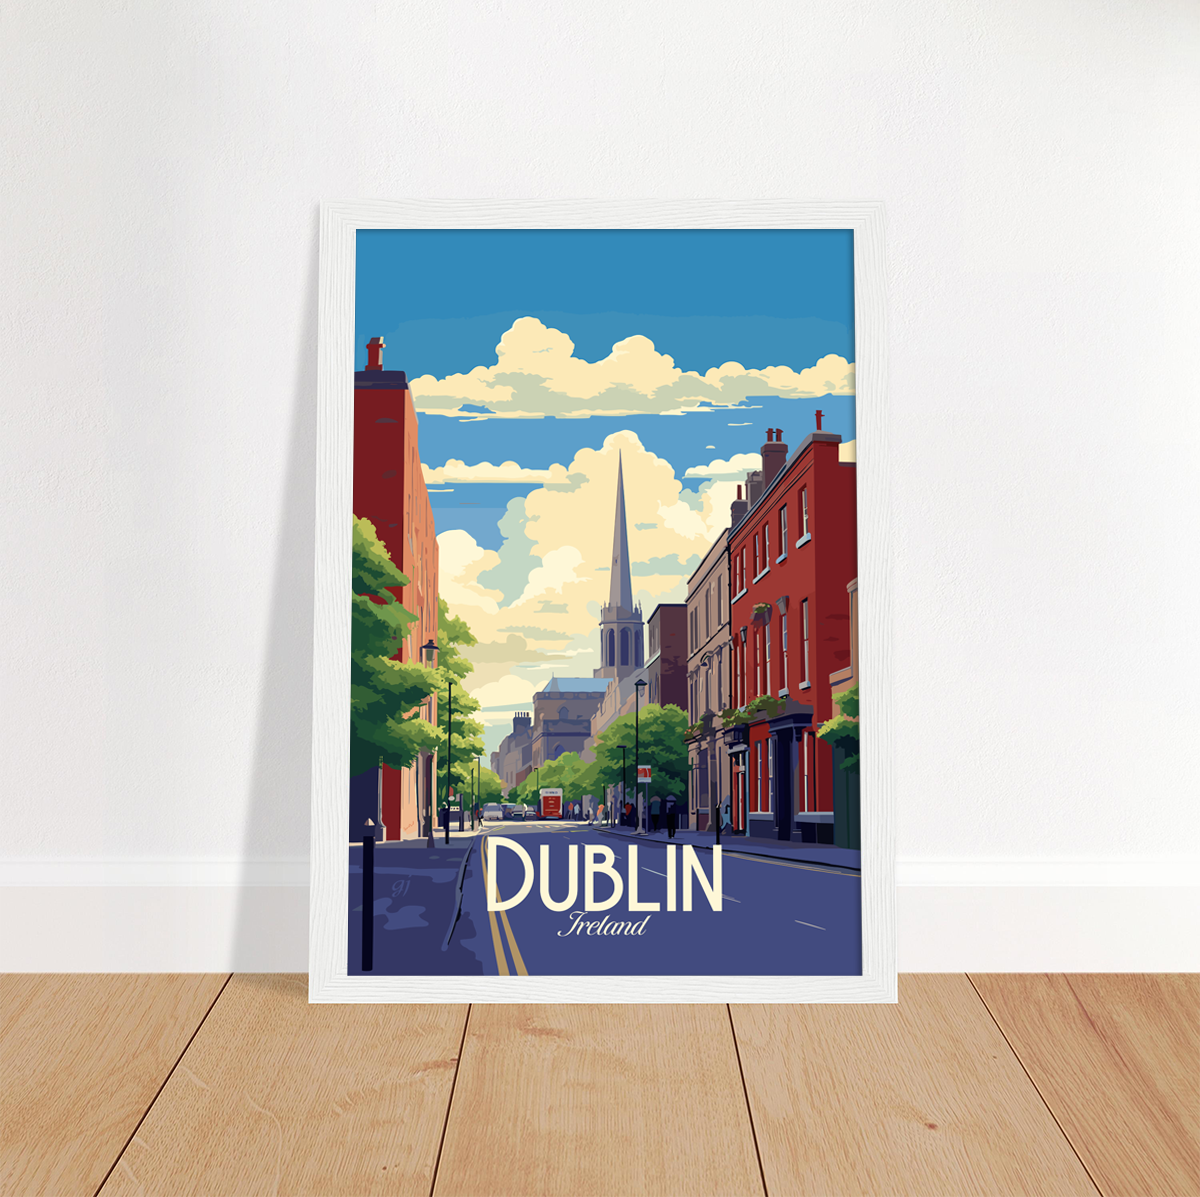 Dublin poster by bon voyage design